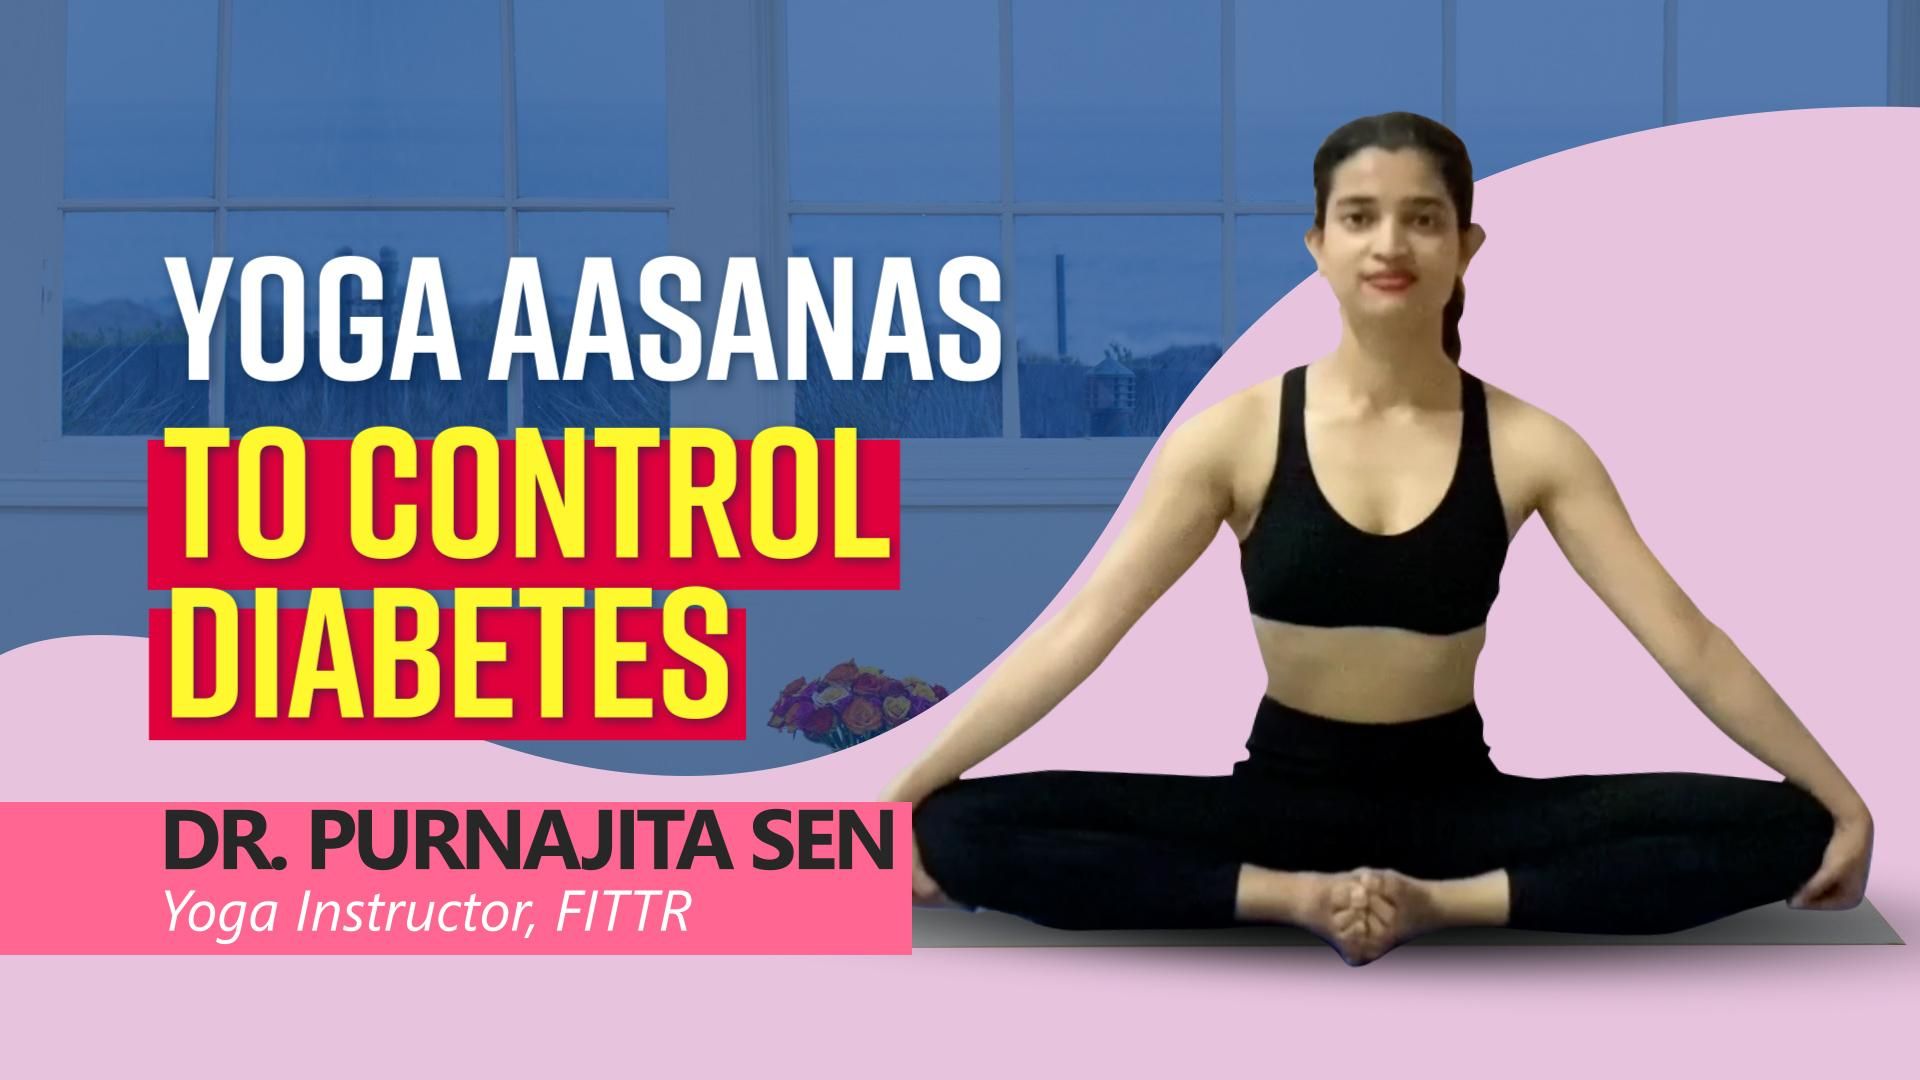 DO YOU KNOW HOW? - Inverted yogic asanas vitalises the brain | PPT